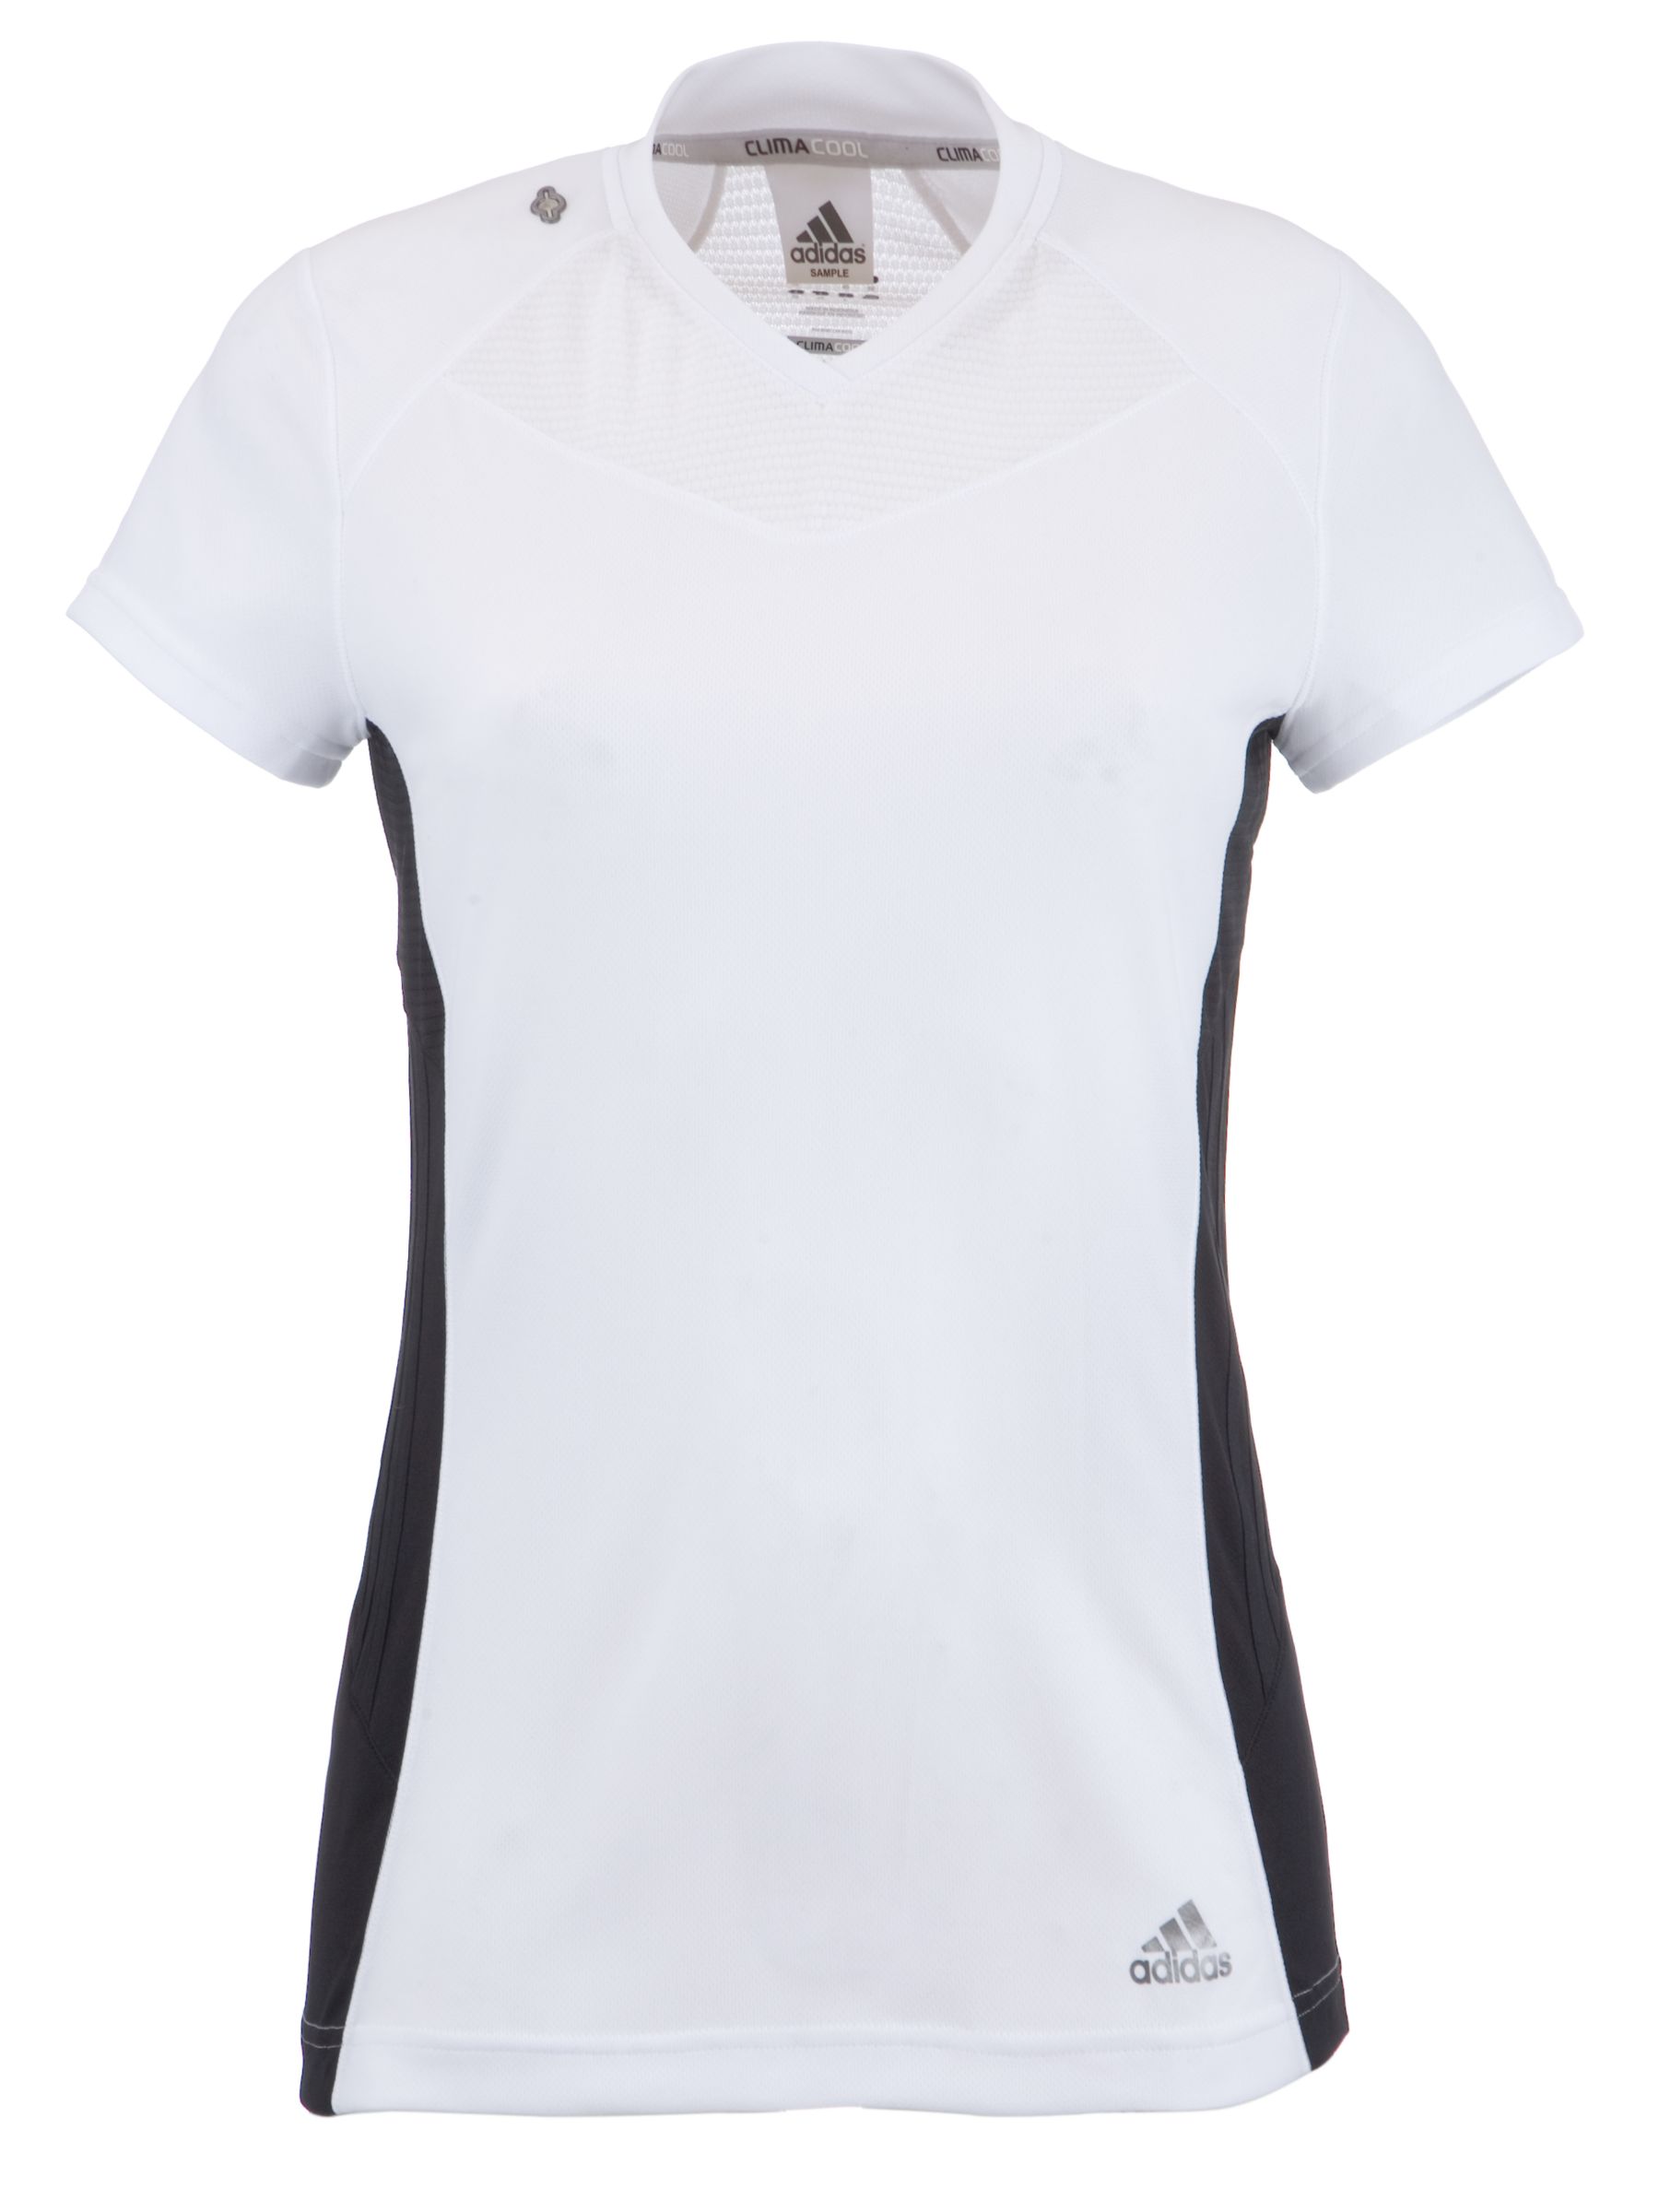 Adidas Supernova Short Sleeve T-Shirt, White/Black